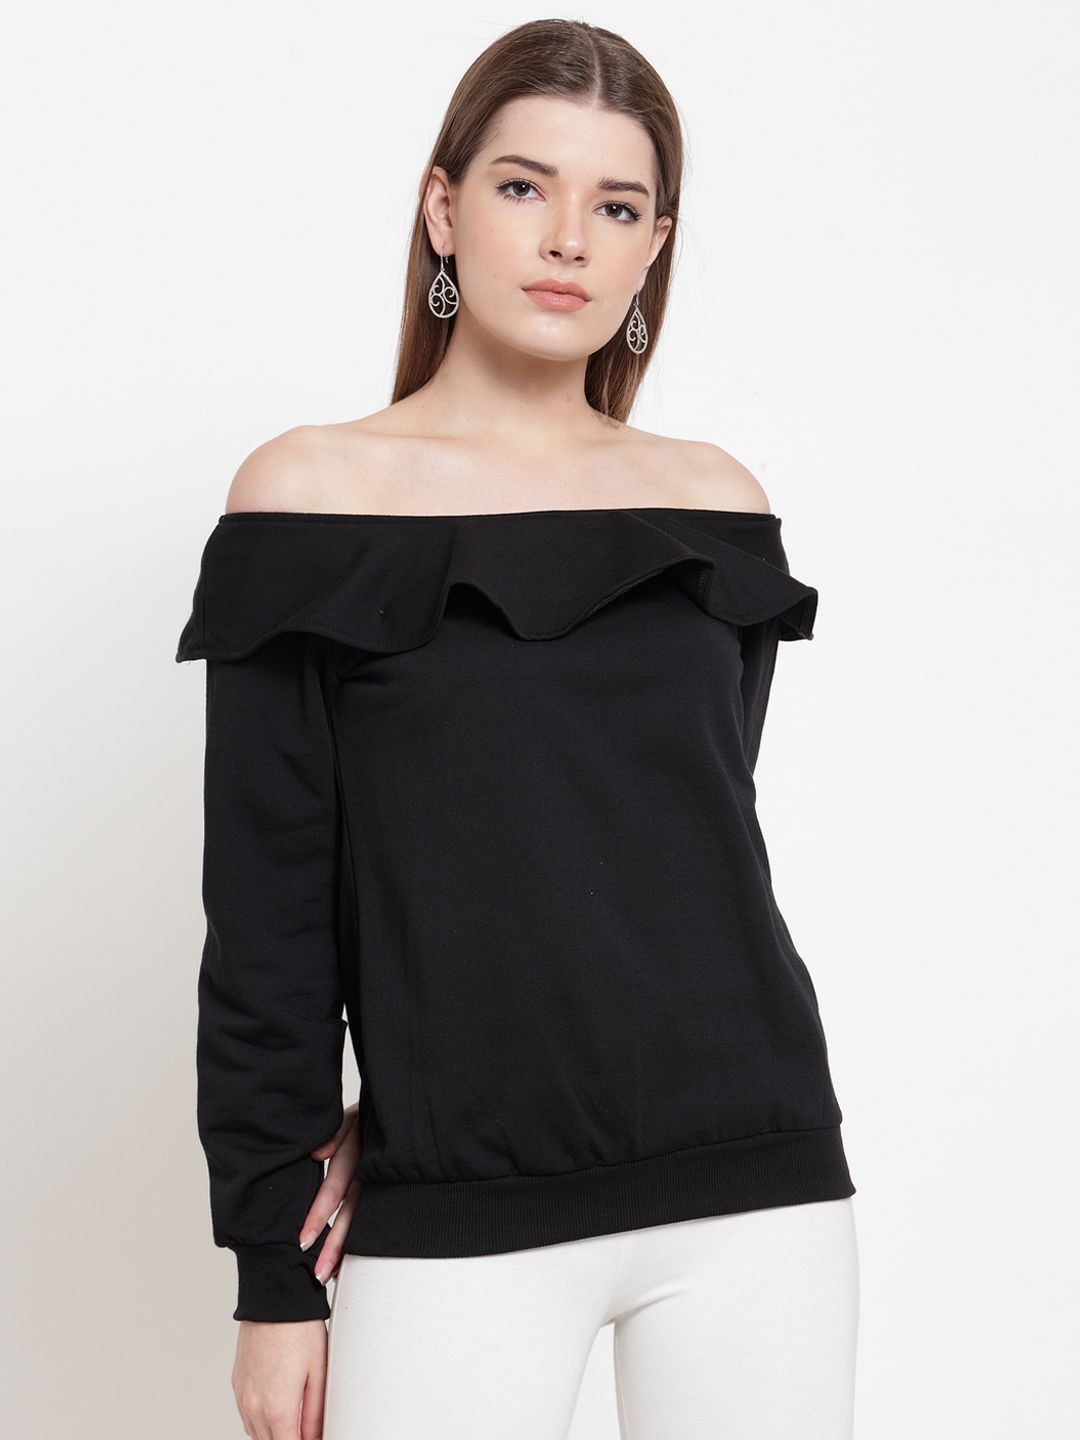 Belle Fille Women Black Solid Sweatshirt Price in India